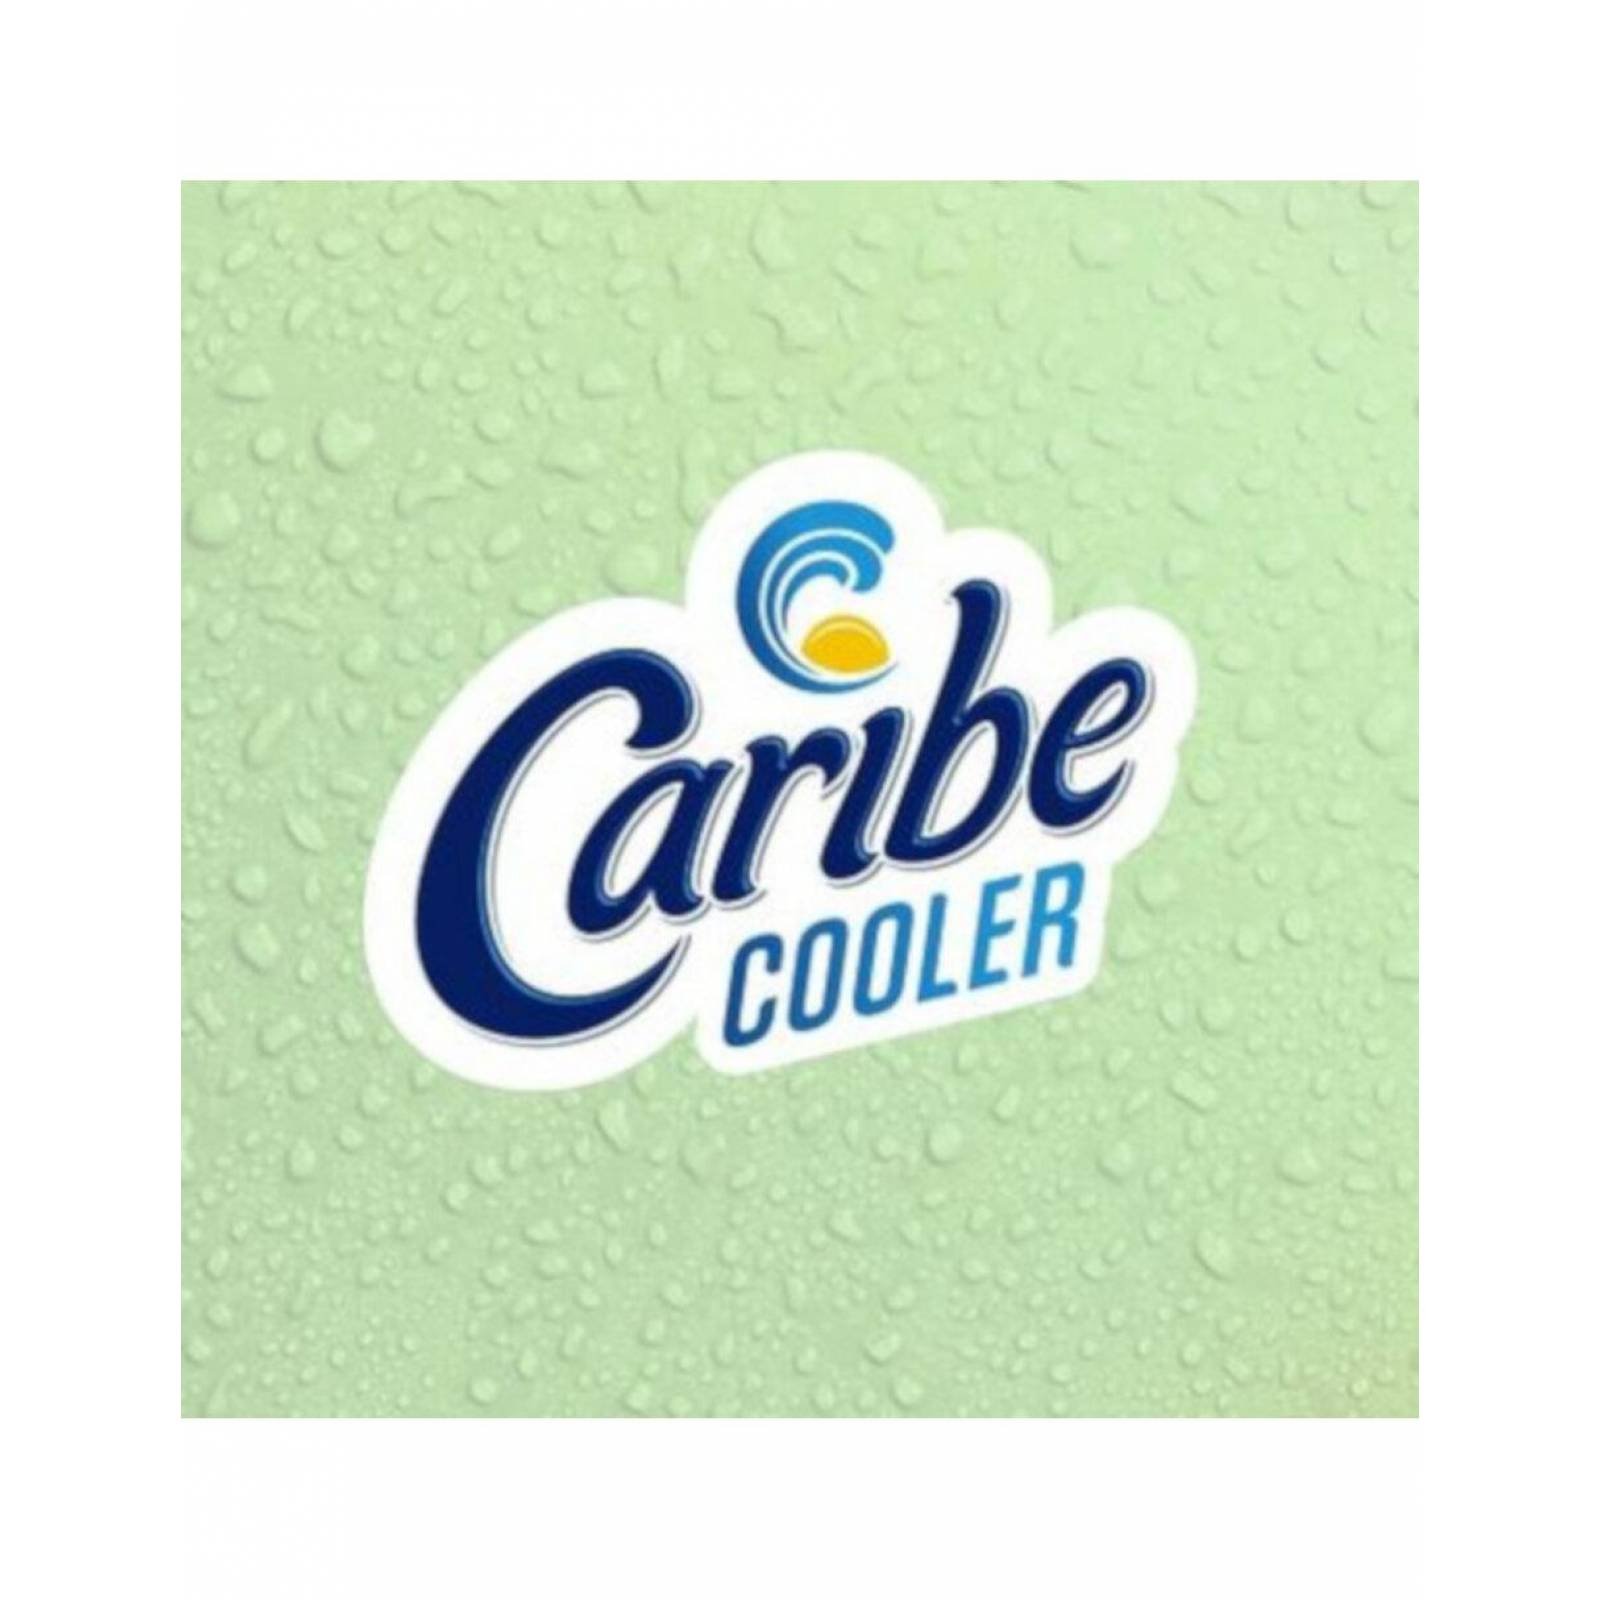 Pack de 24 Caribe Cooler Manzana Kiwi 300 ml 